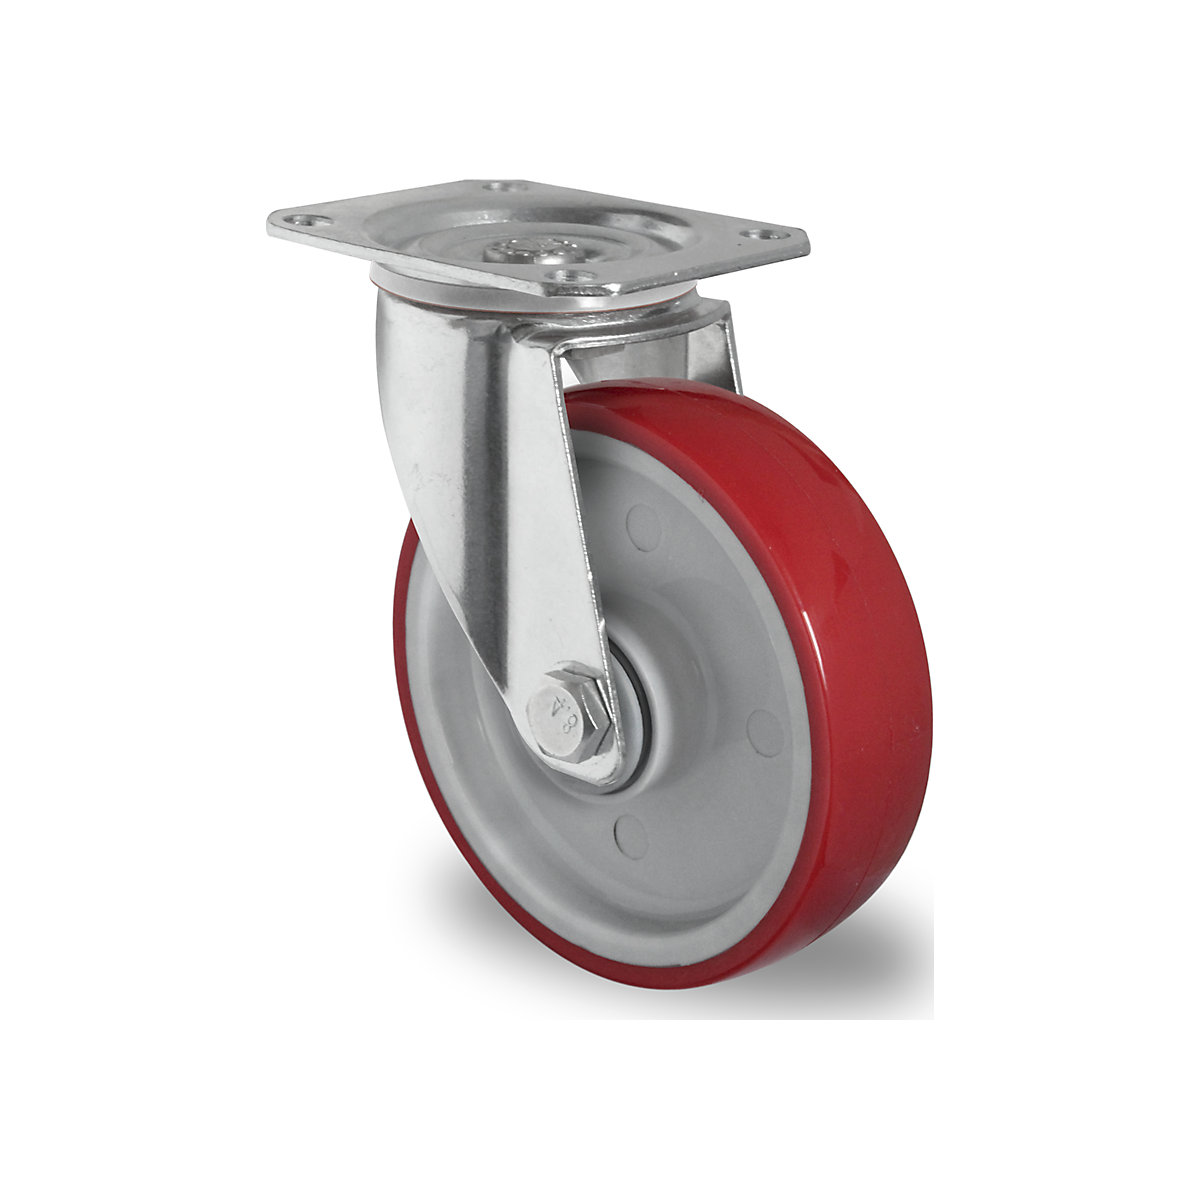 Červená PU obruč na polyamidovém disku – eurokraft basic, Ø kola x šířka 200 x 46 mm, od 2 ks, otočné kolo-2